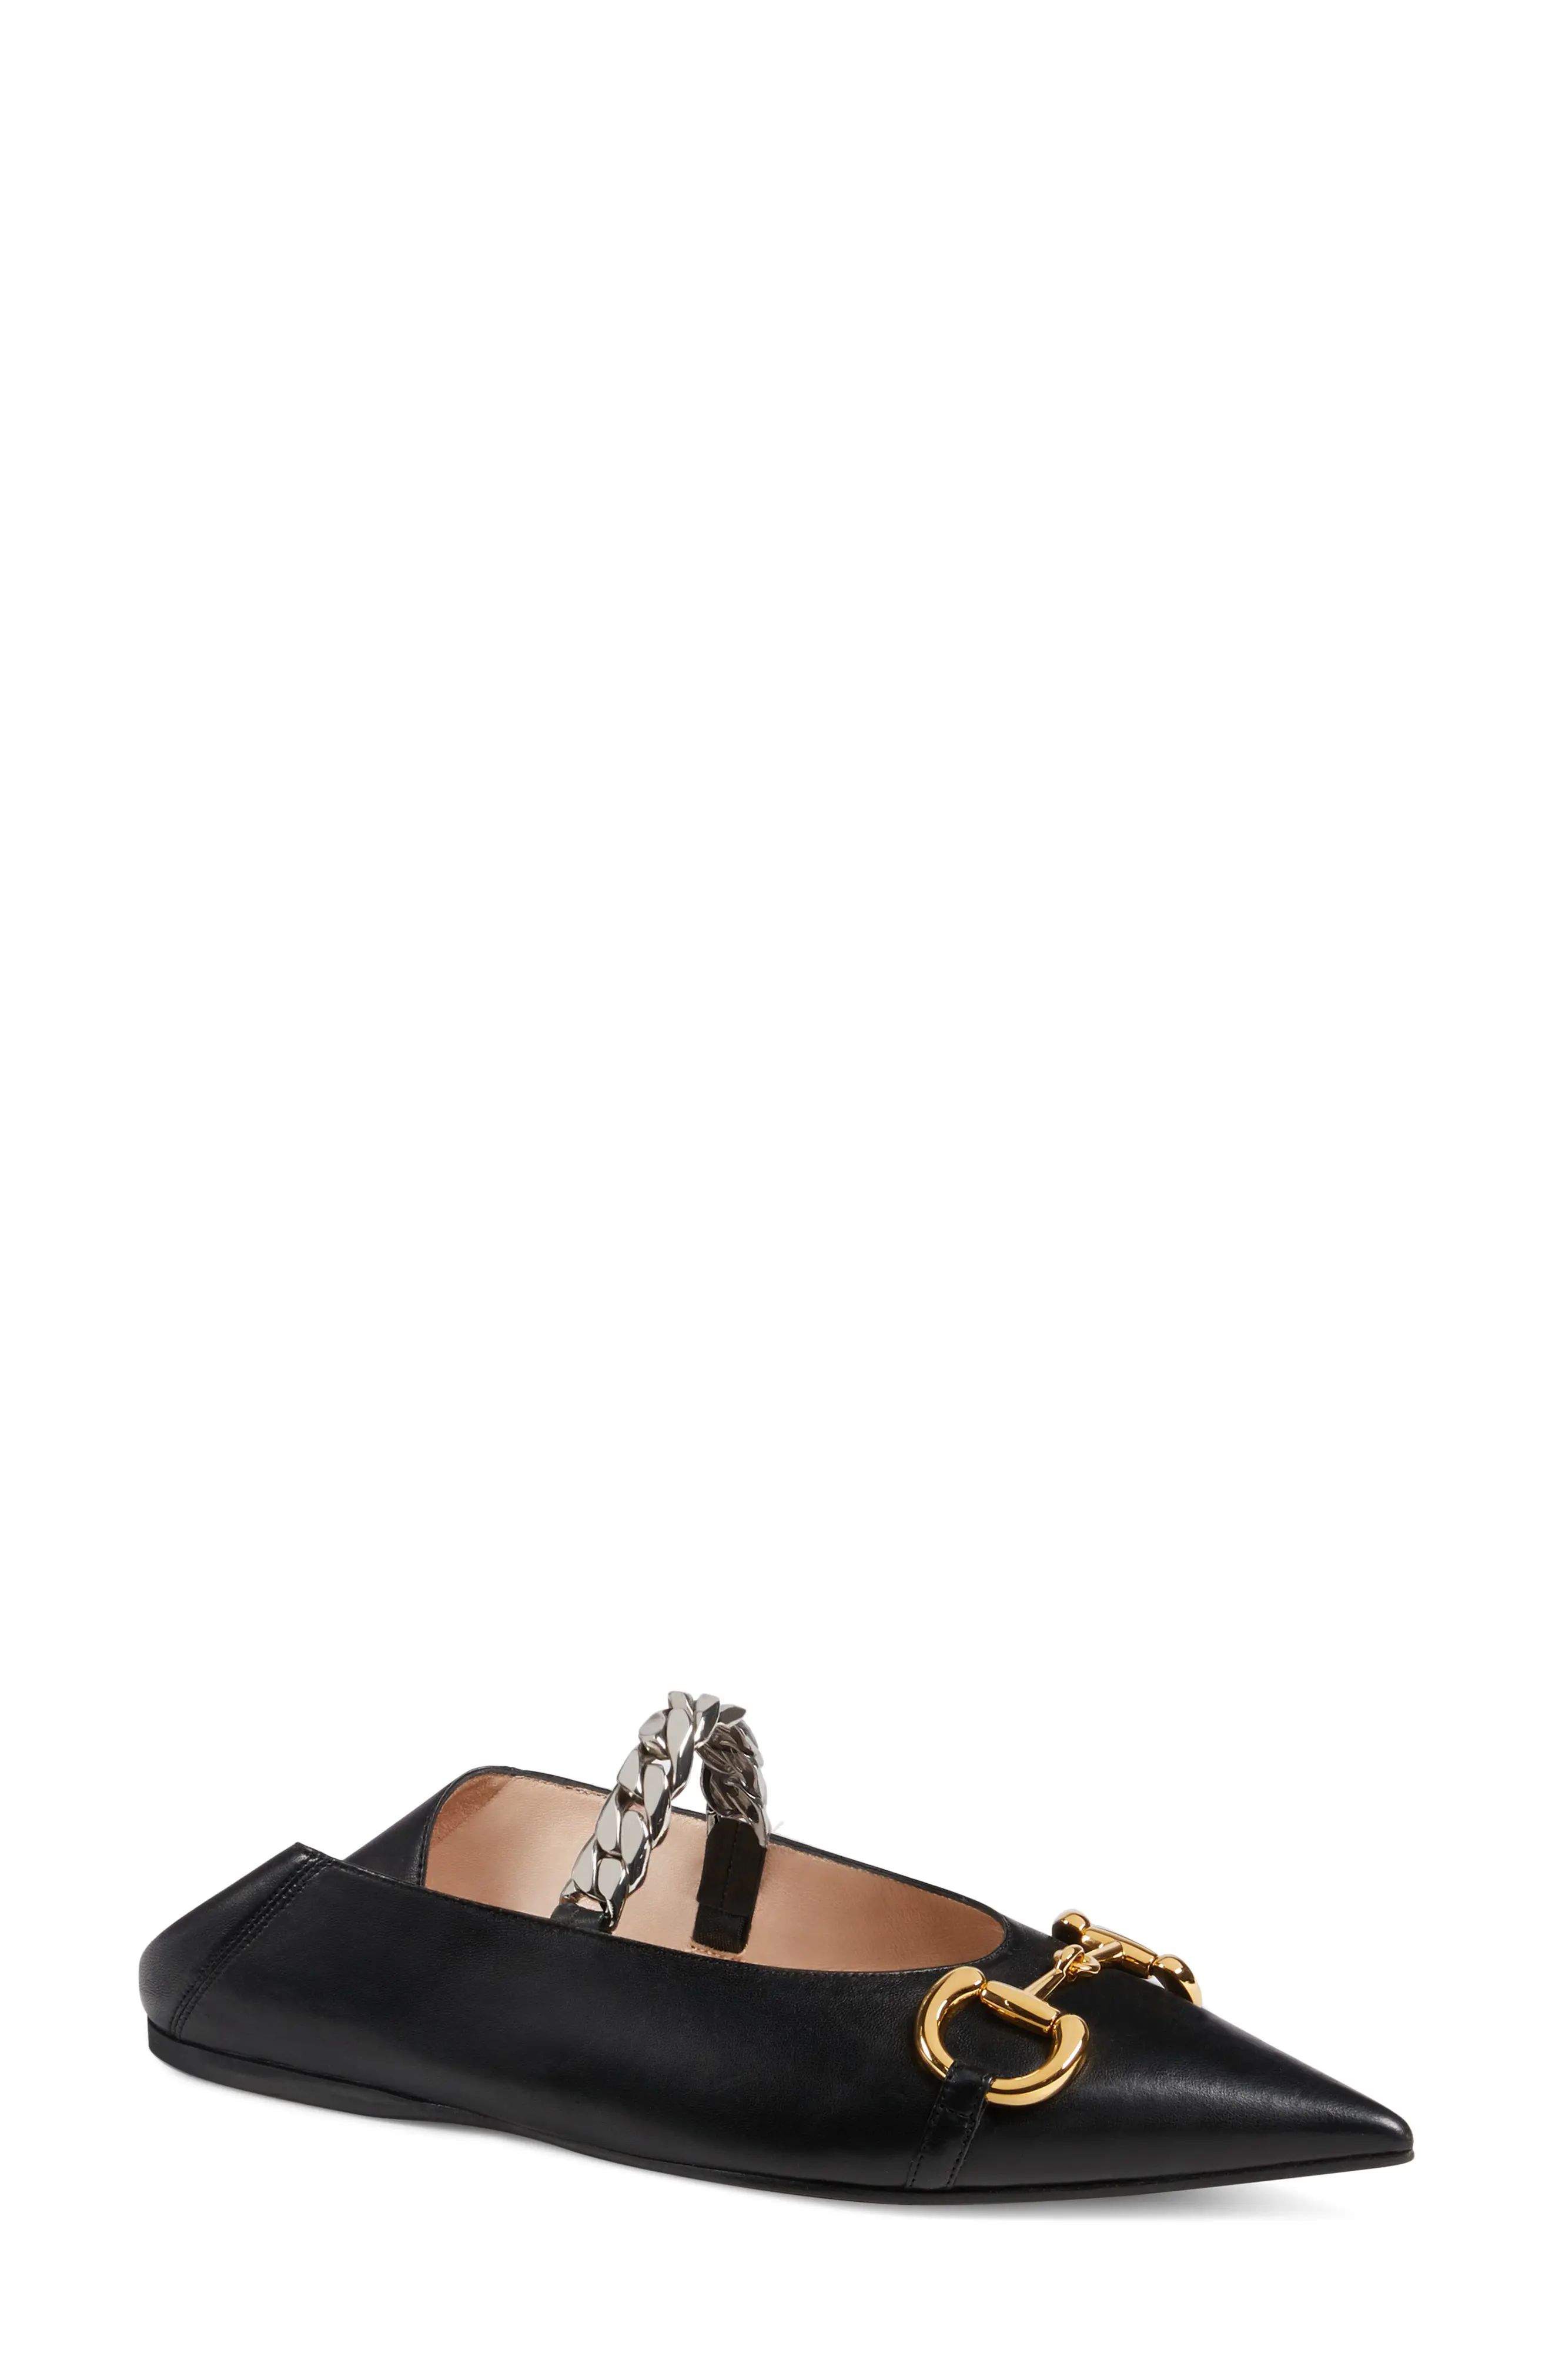 Women's Gucci Deva Horsebit & Chain Convertible Pointed Toe Ballet Flat, Size 7US - Black | Nordstrom